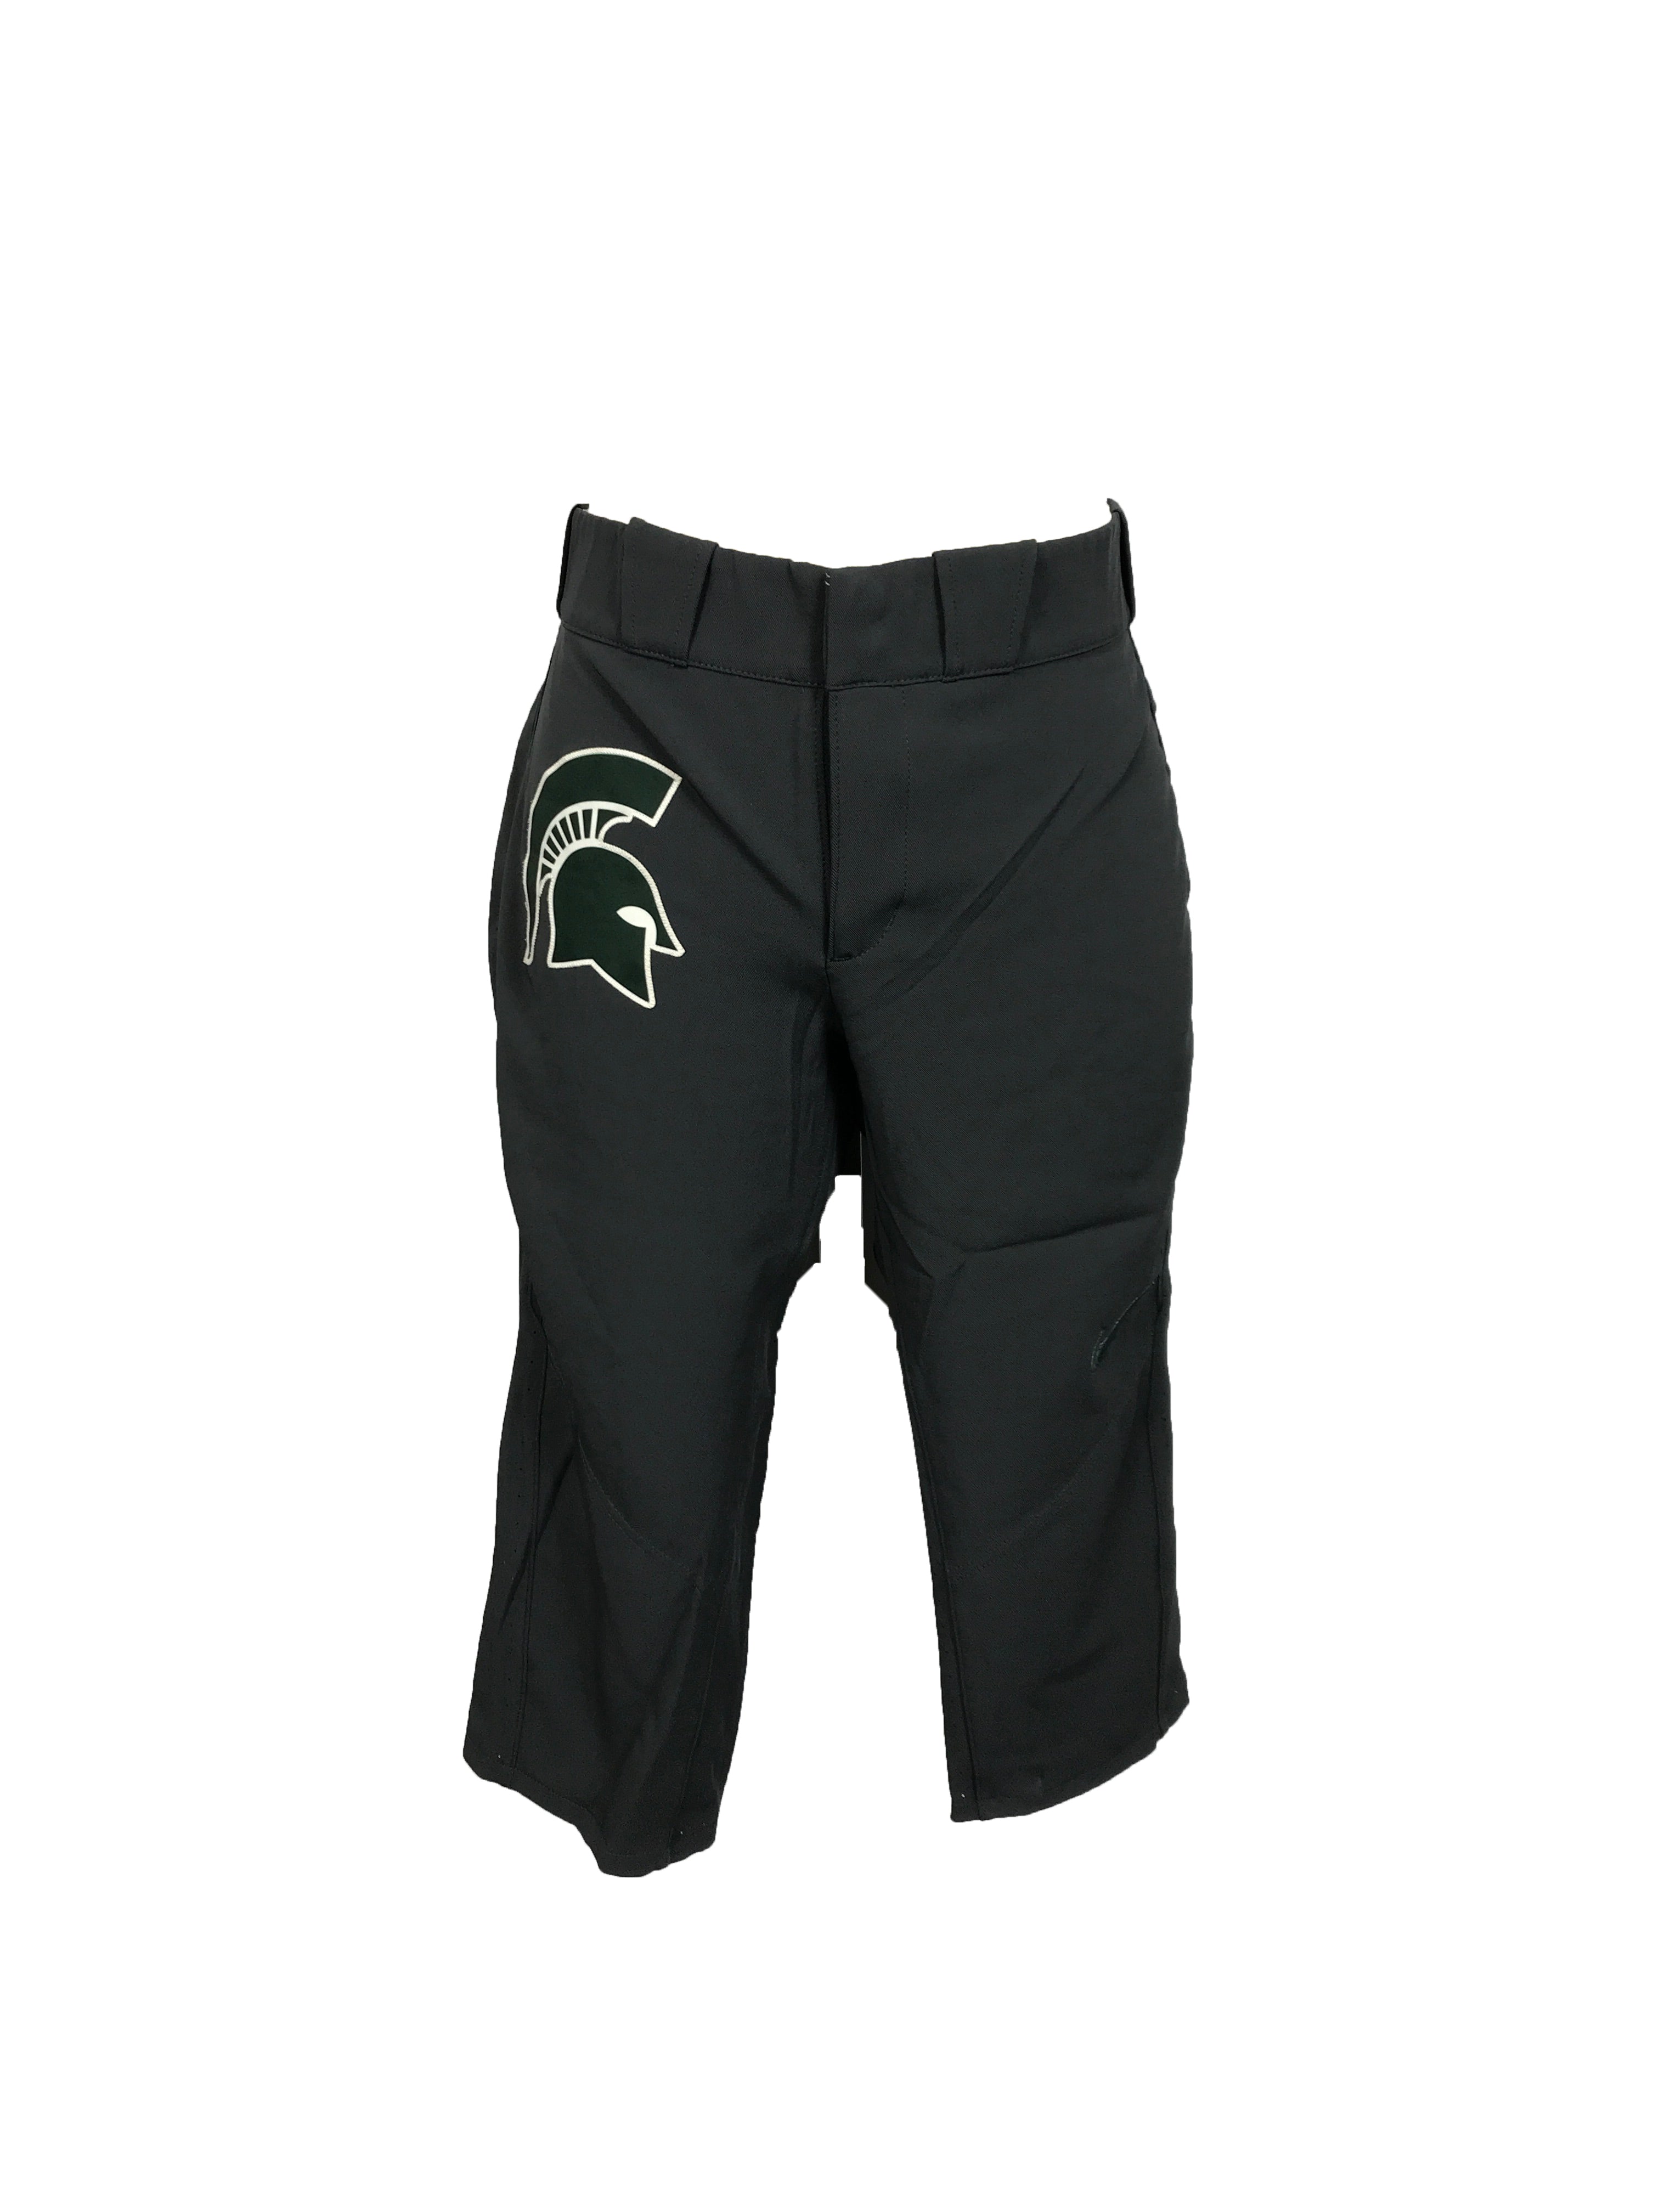 Nike x Michigan State Grey Softball Capri Pants Women's Size XL L+4